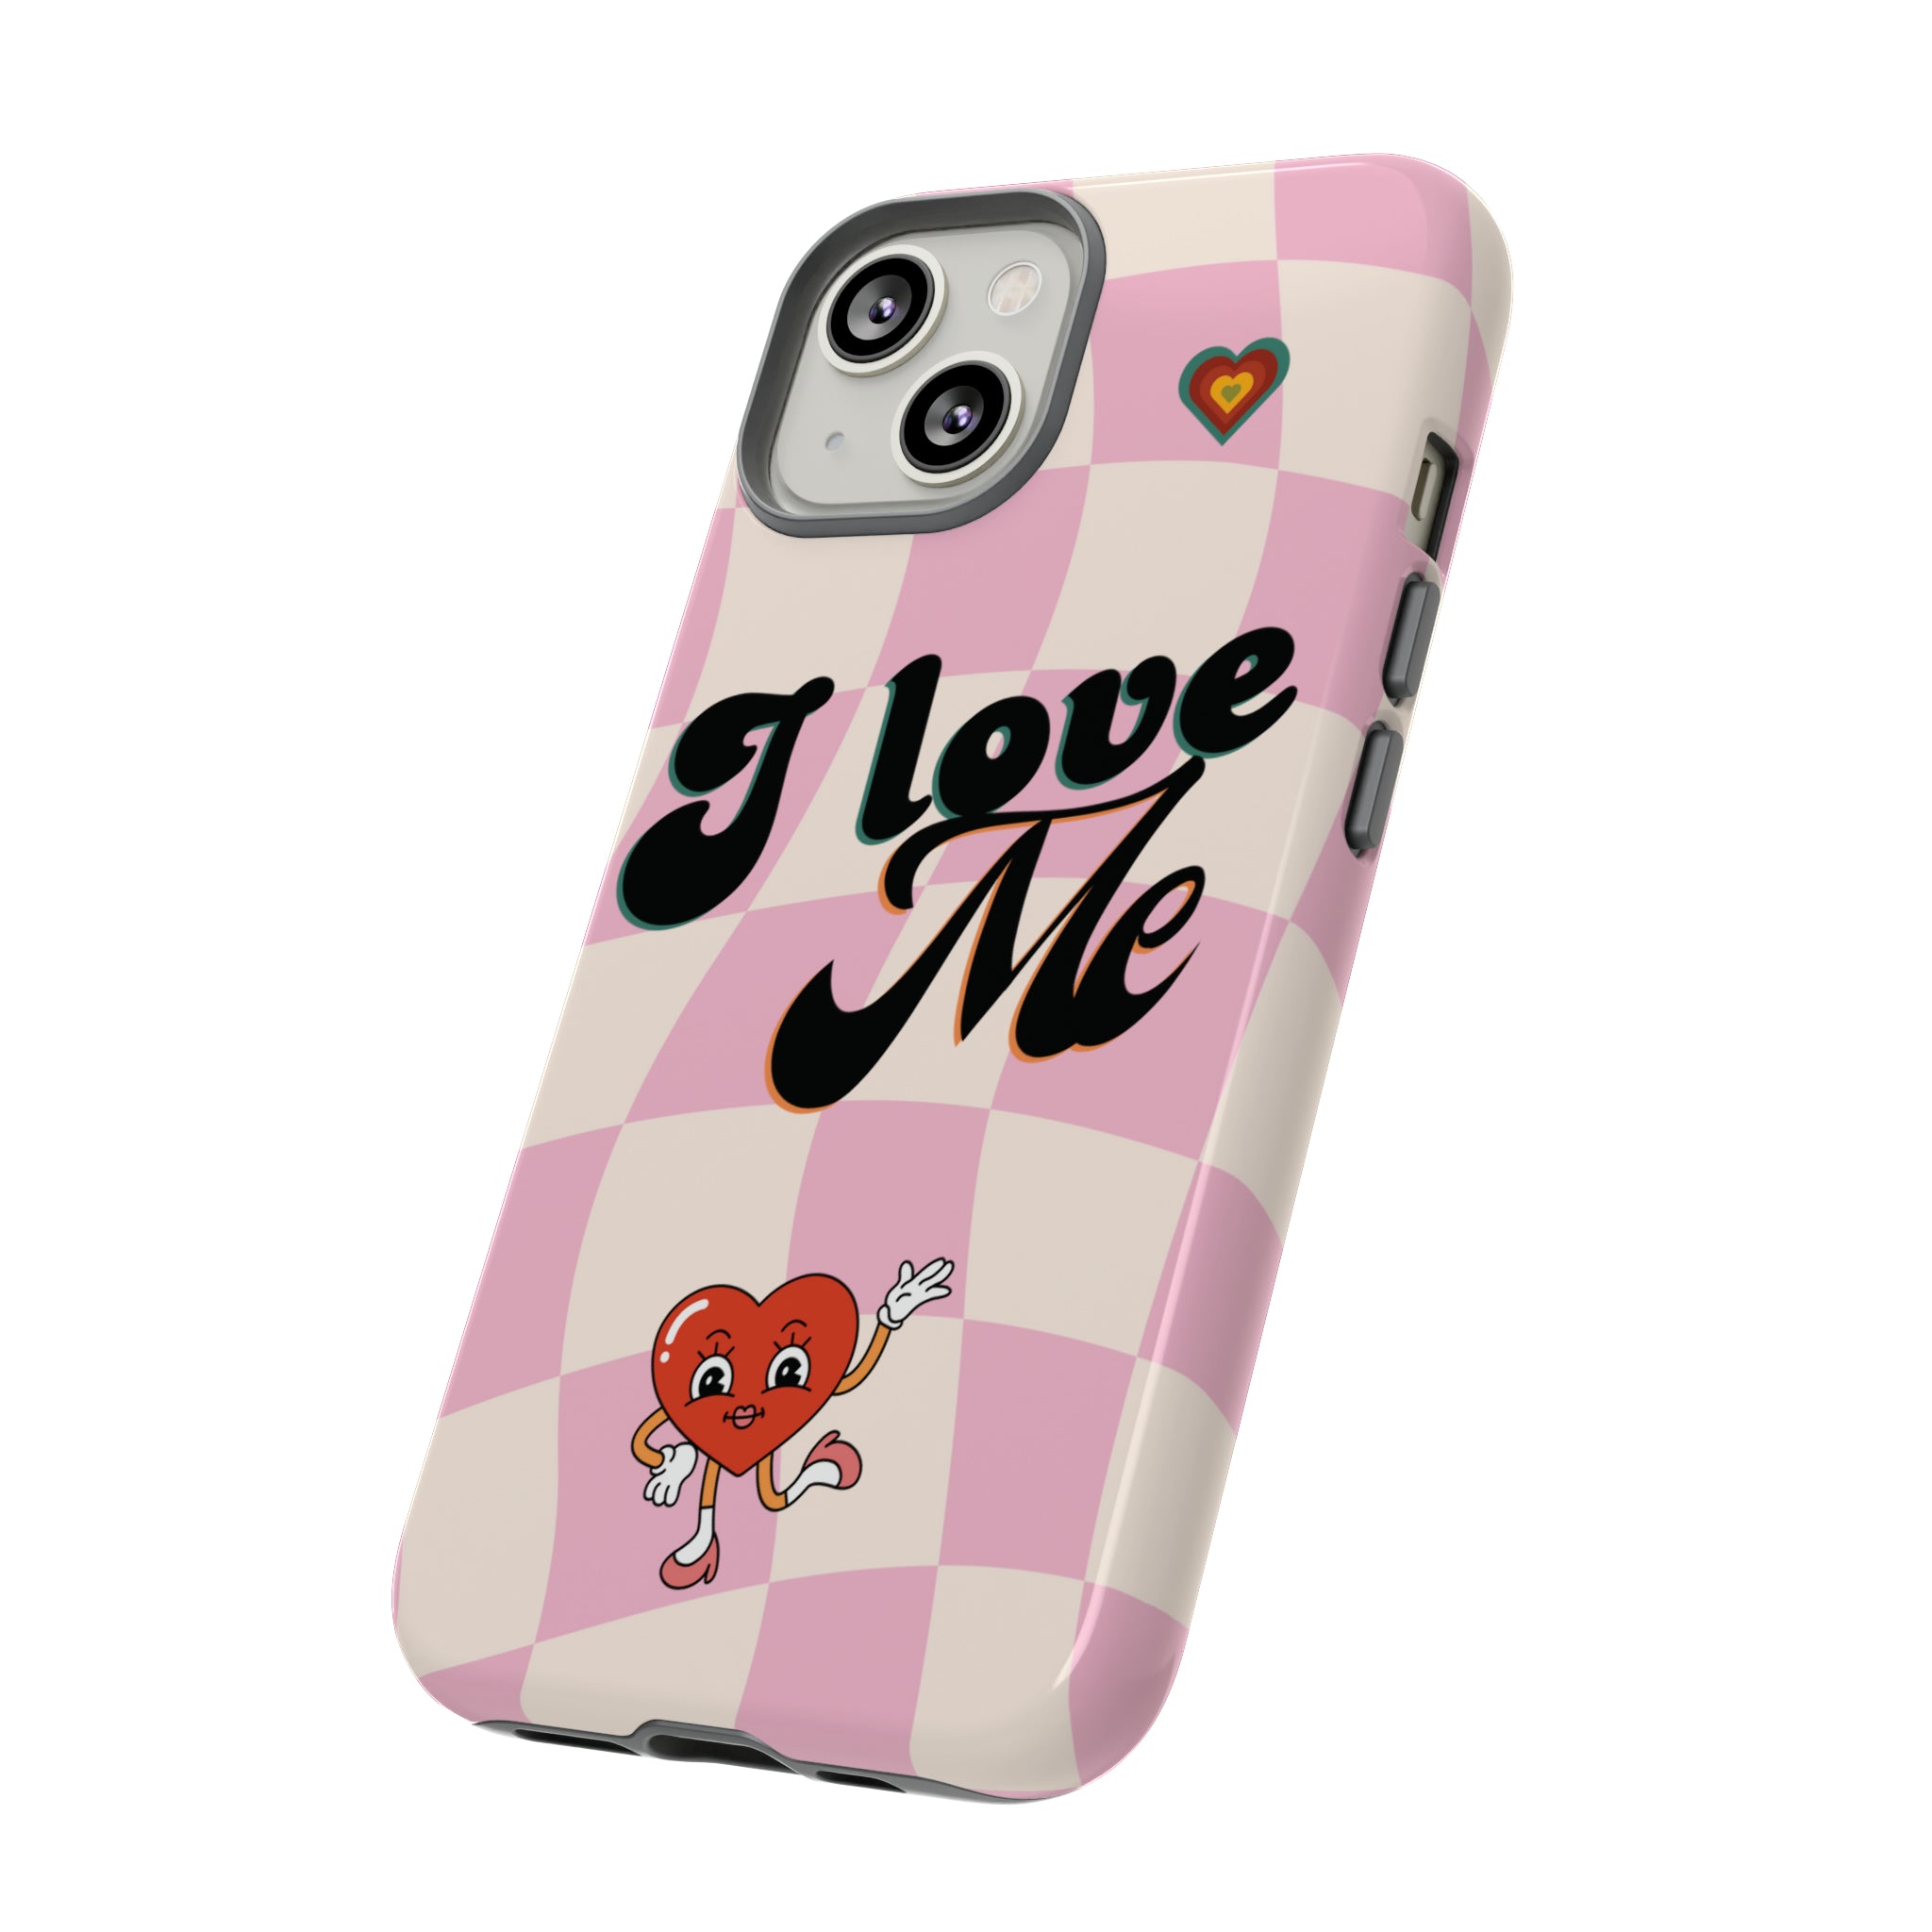 I Love Me phone case. iPhone case. Samsung Case. Google Pixel Case. Retro Phone Case. Checkers Design. Checkers phone case. Funny Phone Case